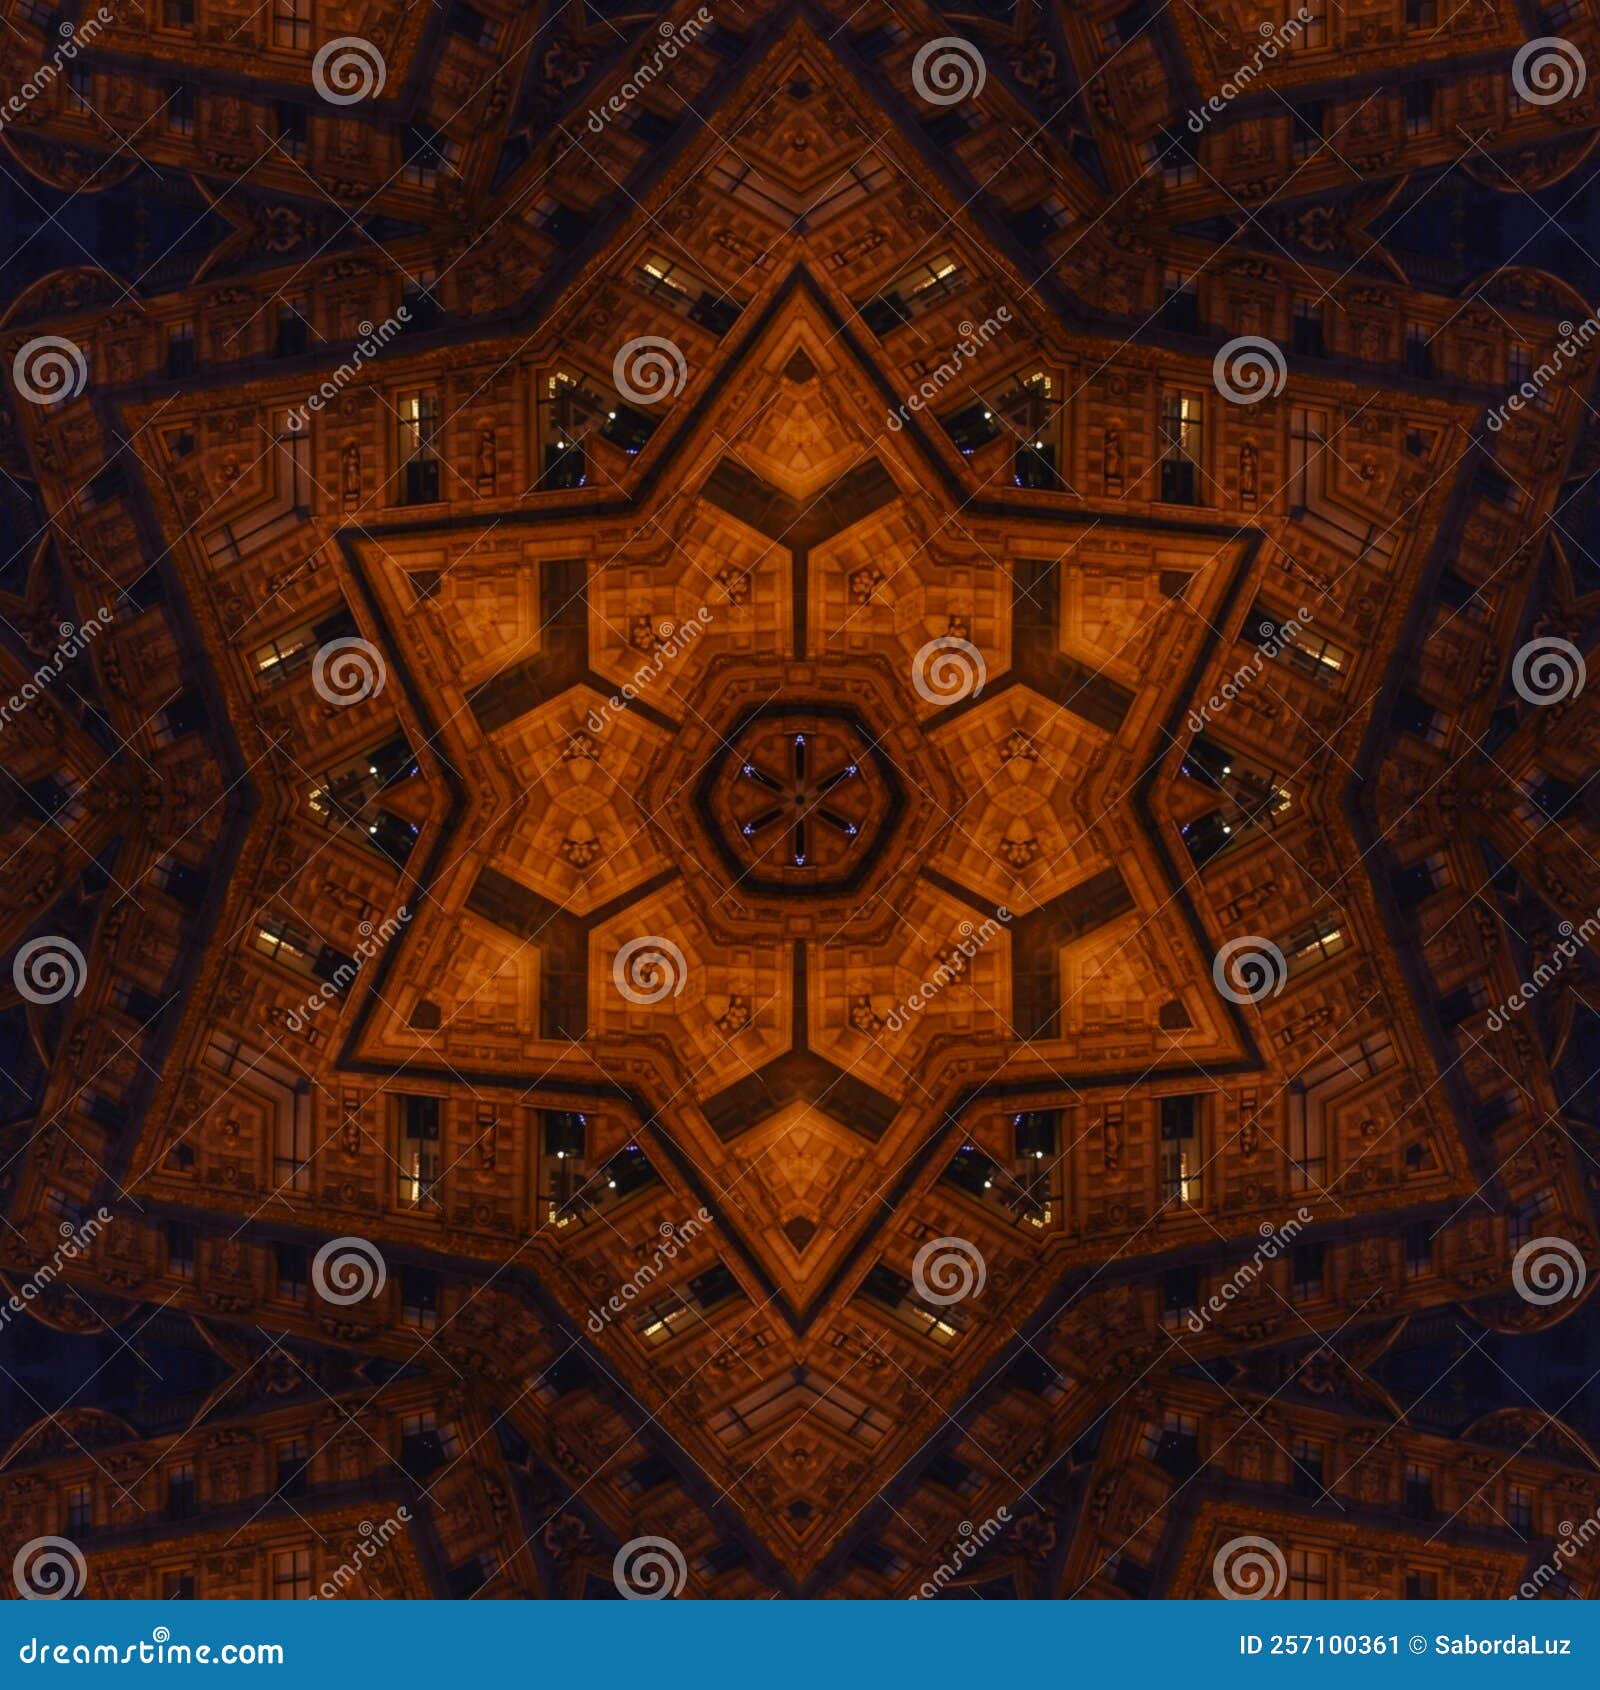 fantastic mandala fractals kaleidoscope background texture